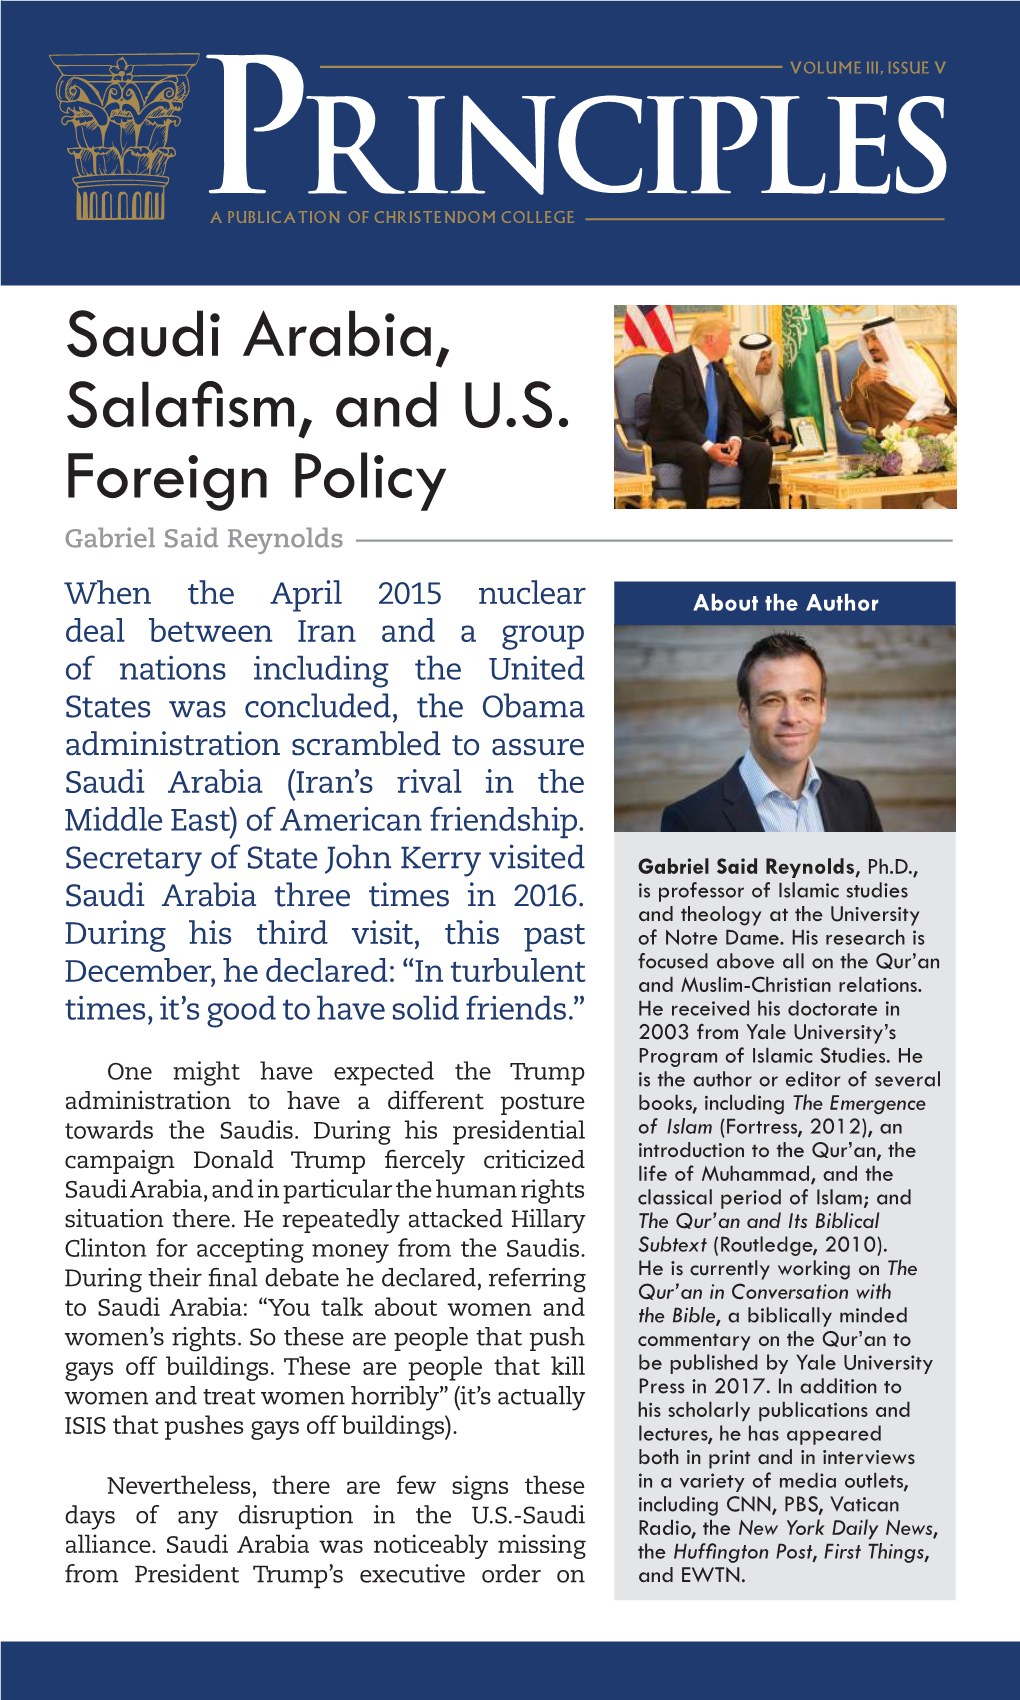 Saudi Arabia, Salafism, and US Foreign Policy